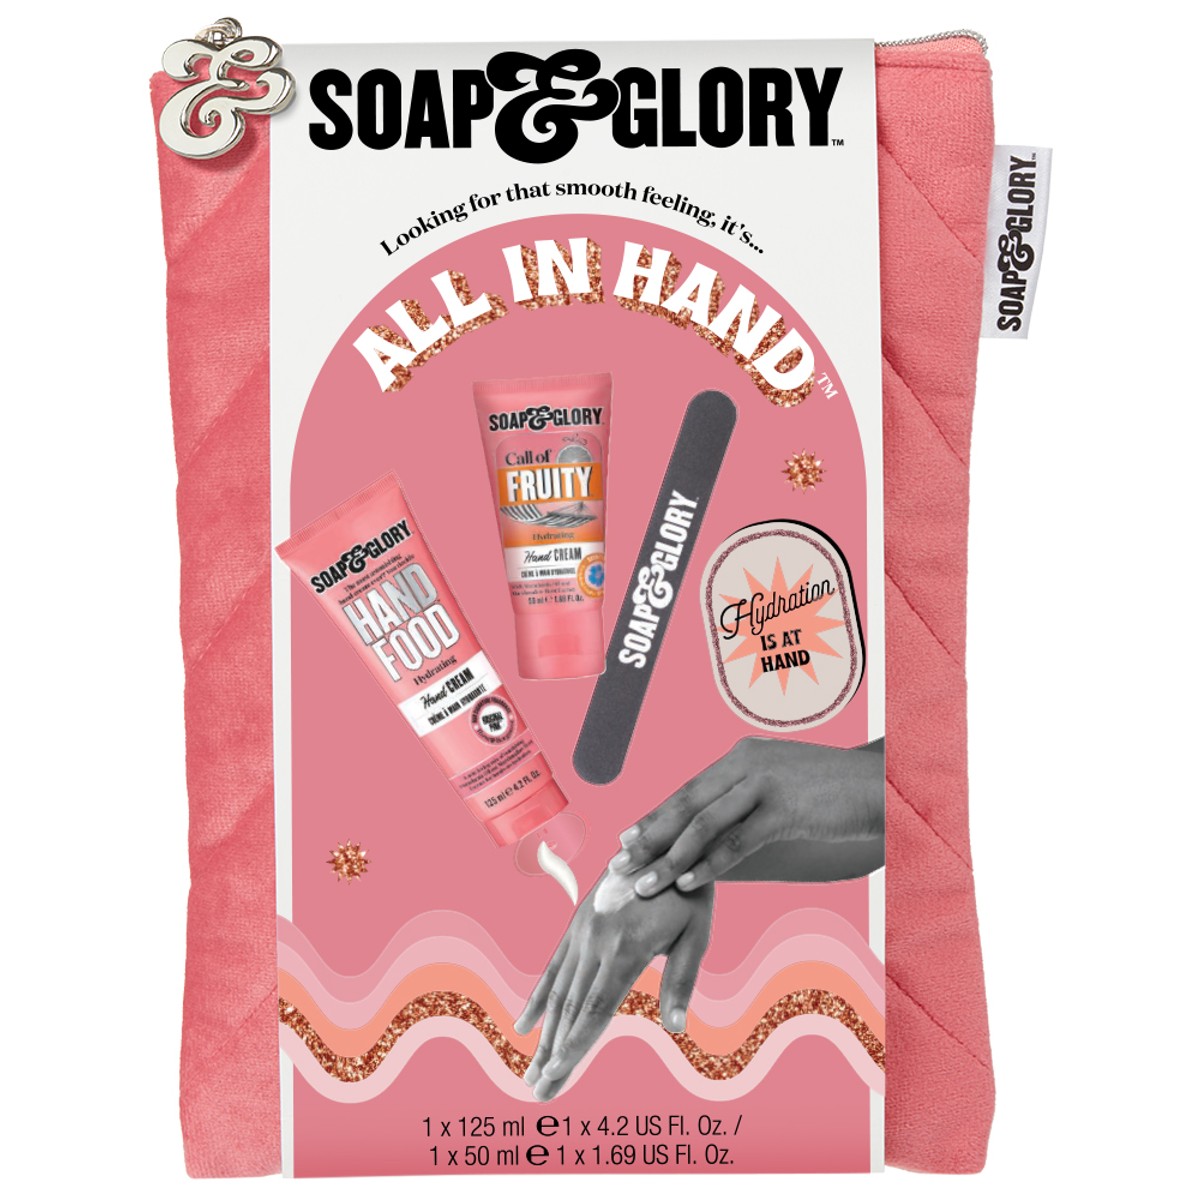 Soap and glory hand care kit christmas gift set